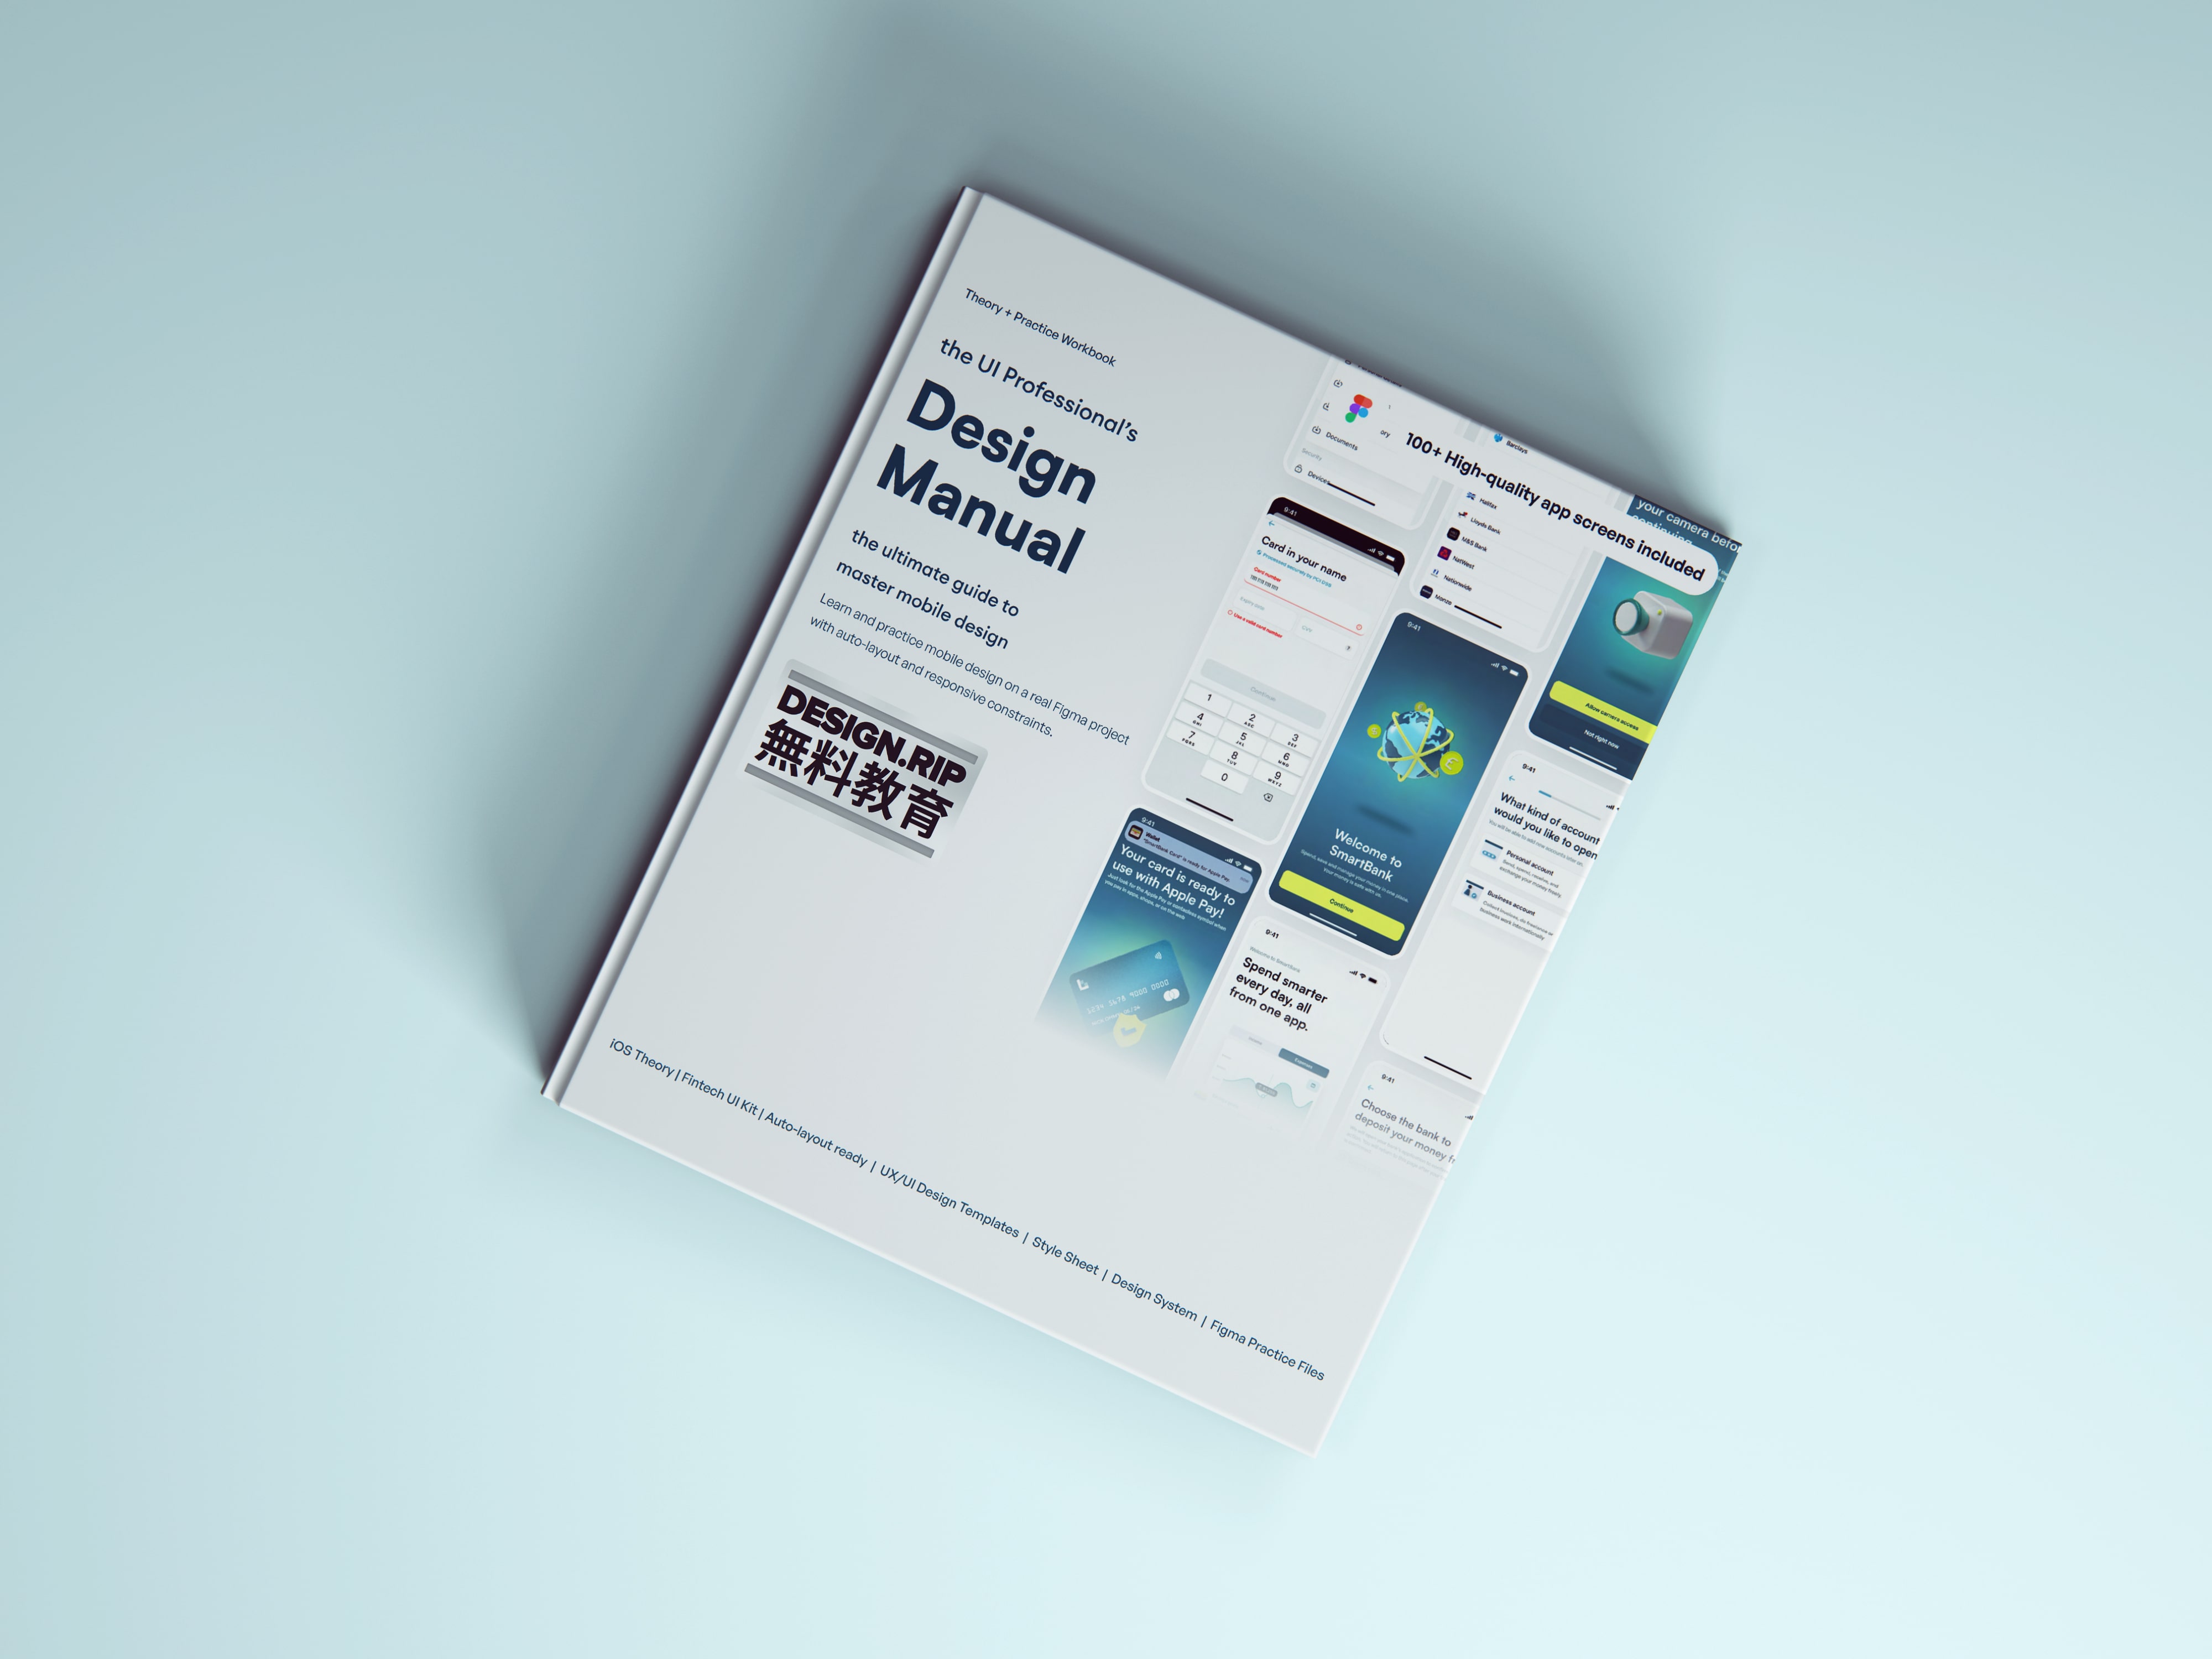 [VIP] The UI Professional's Design Manual